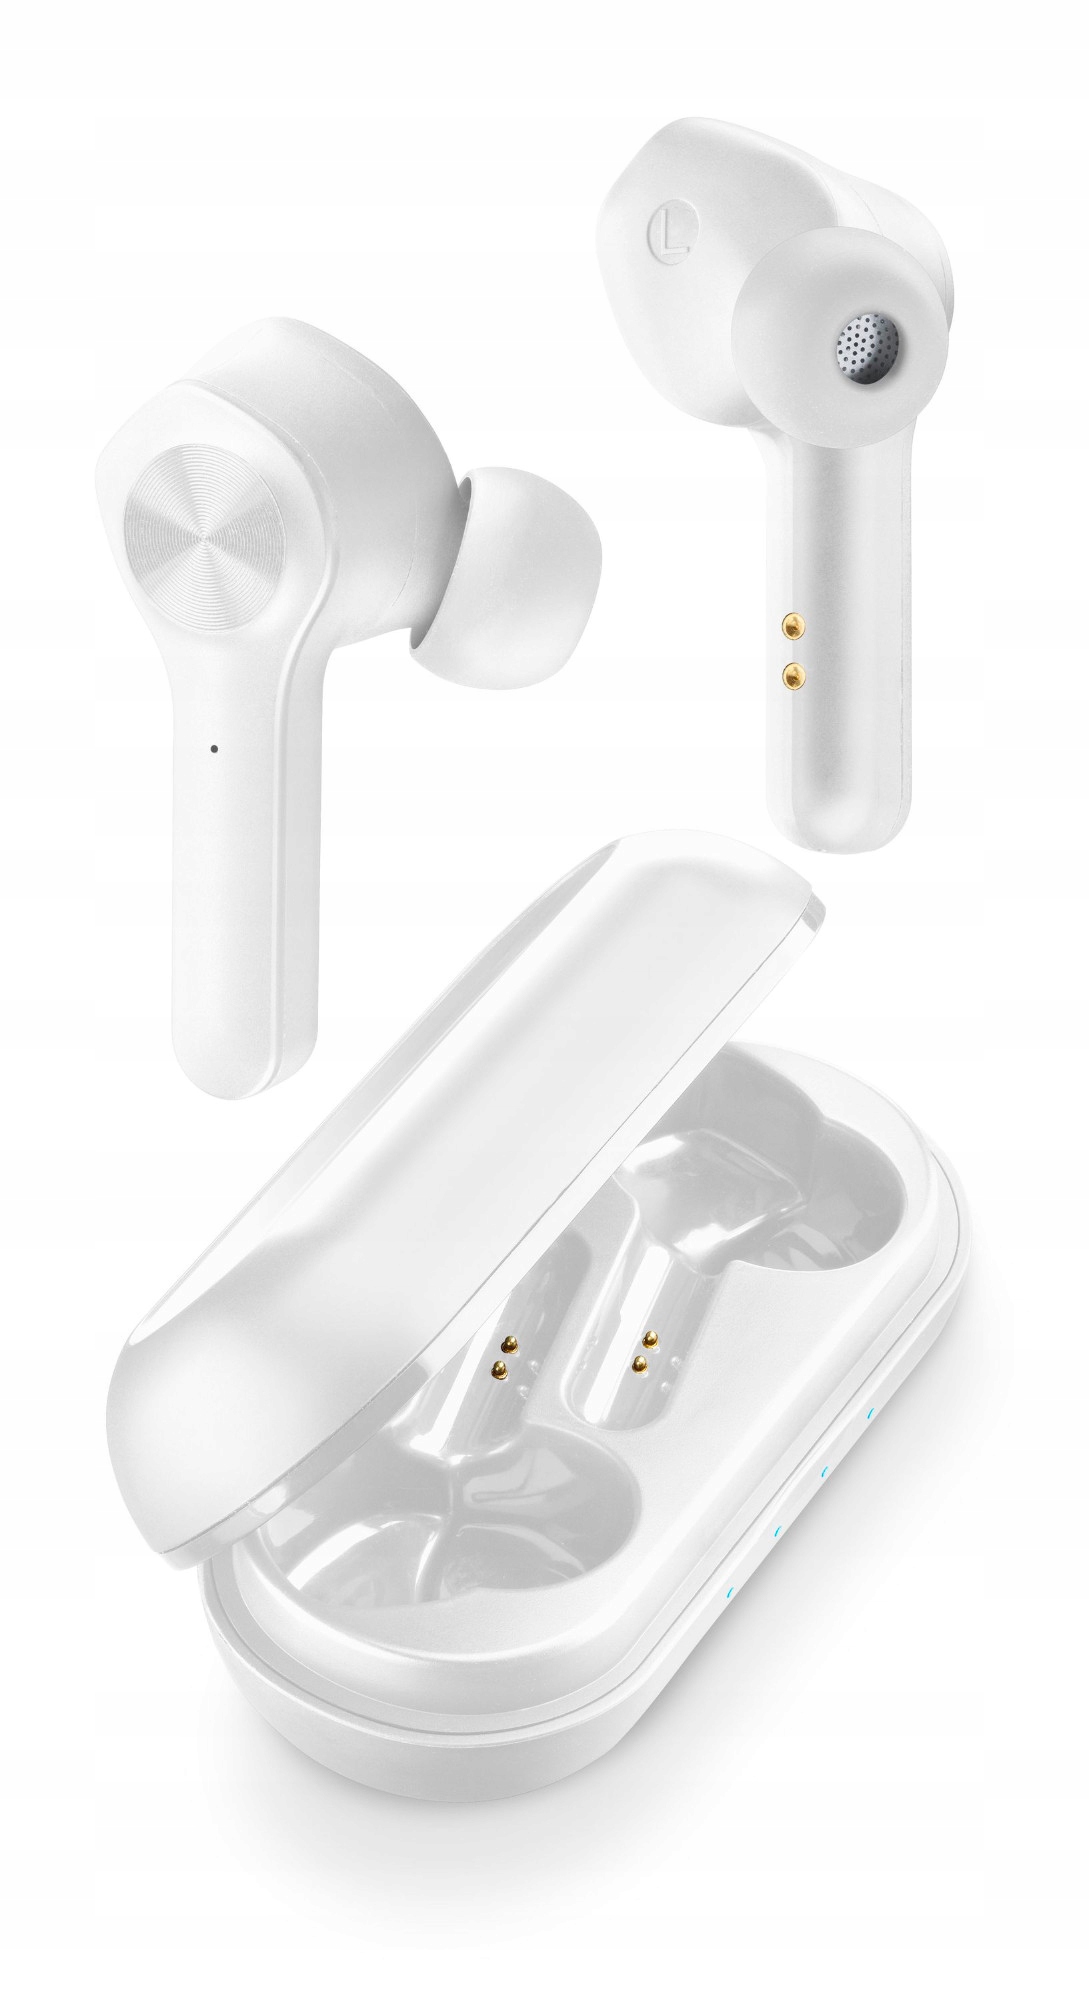 Aql Elusion bezdrátová Bluetooth True Wire sluchátka do uší